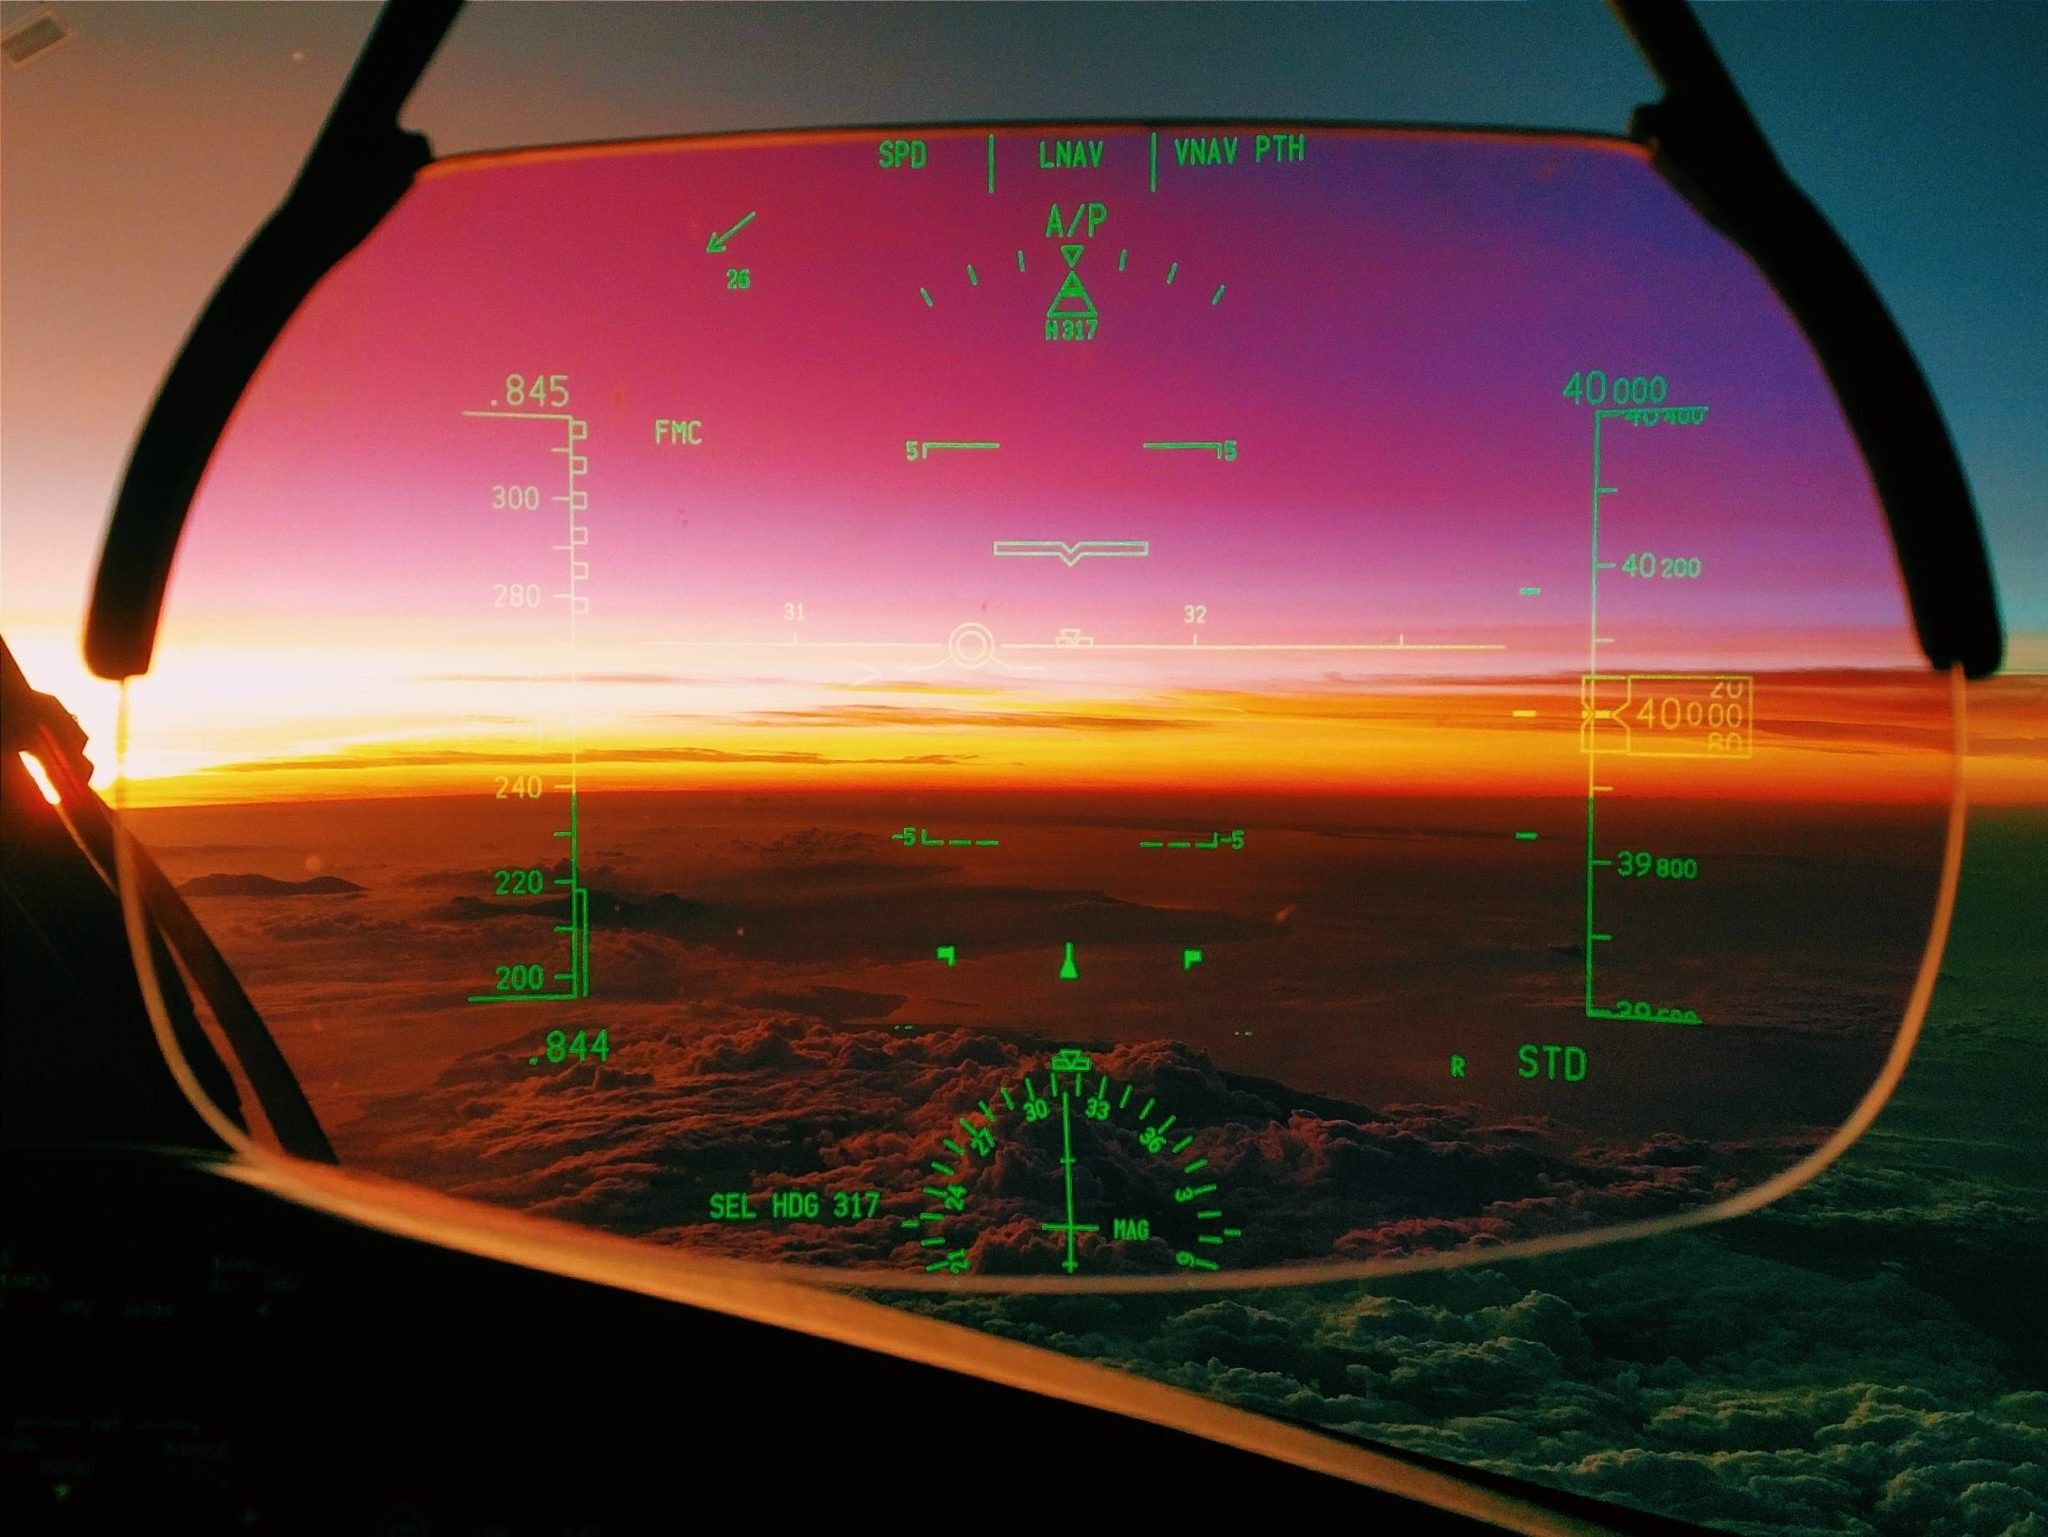 H.U.D. display from an aircraft